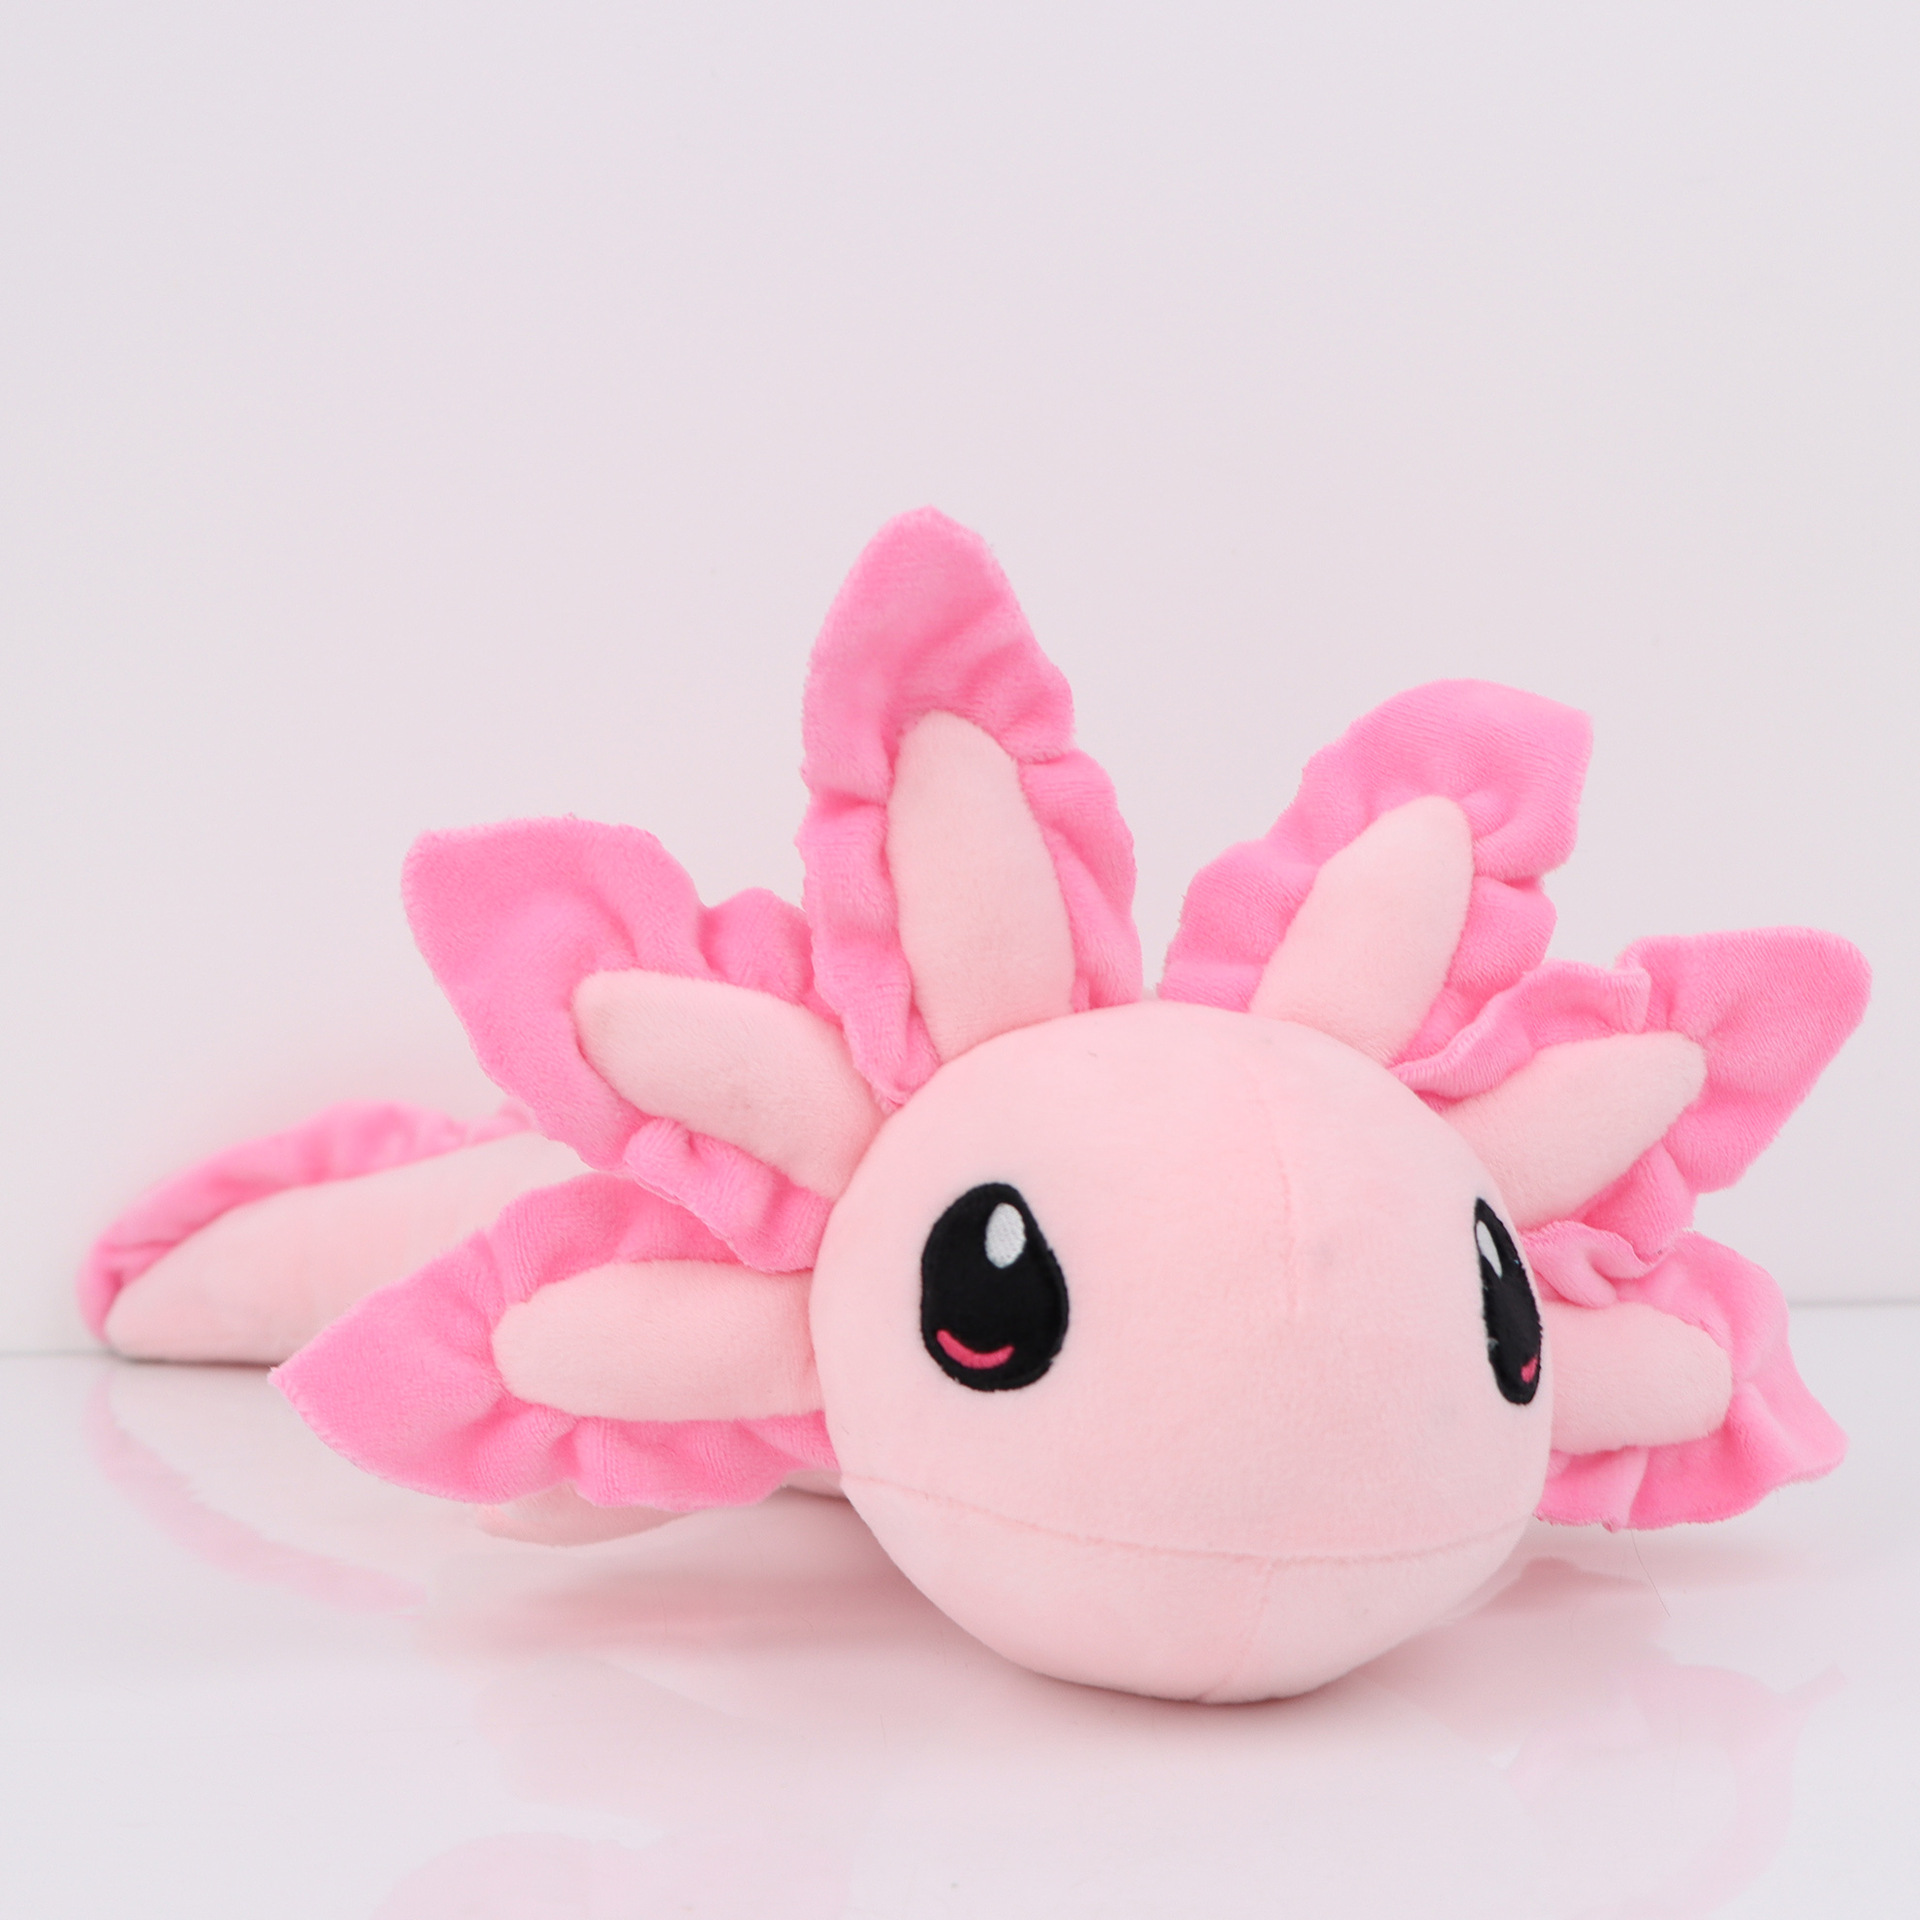 17 Inch Axolotl Plush Toy - Great Gamer Birthday Gift